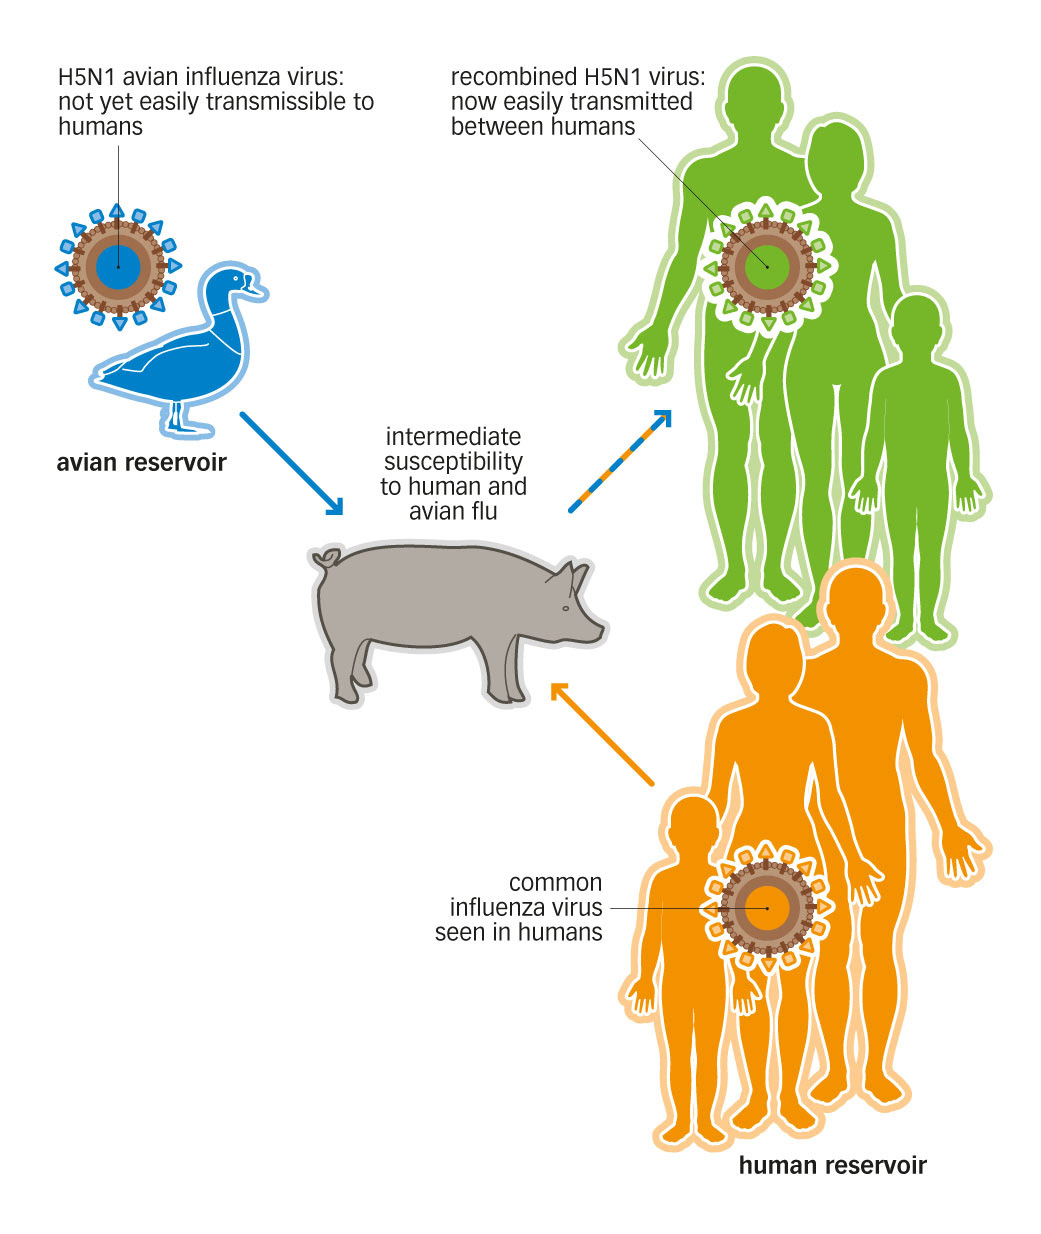 Microbiology illustrations